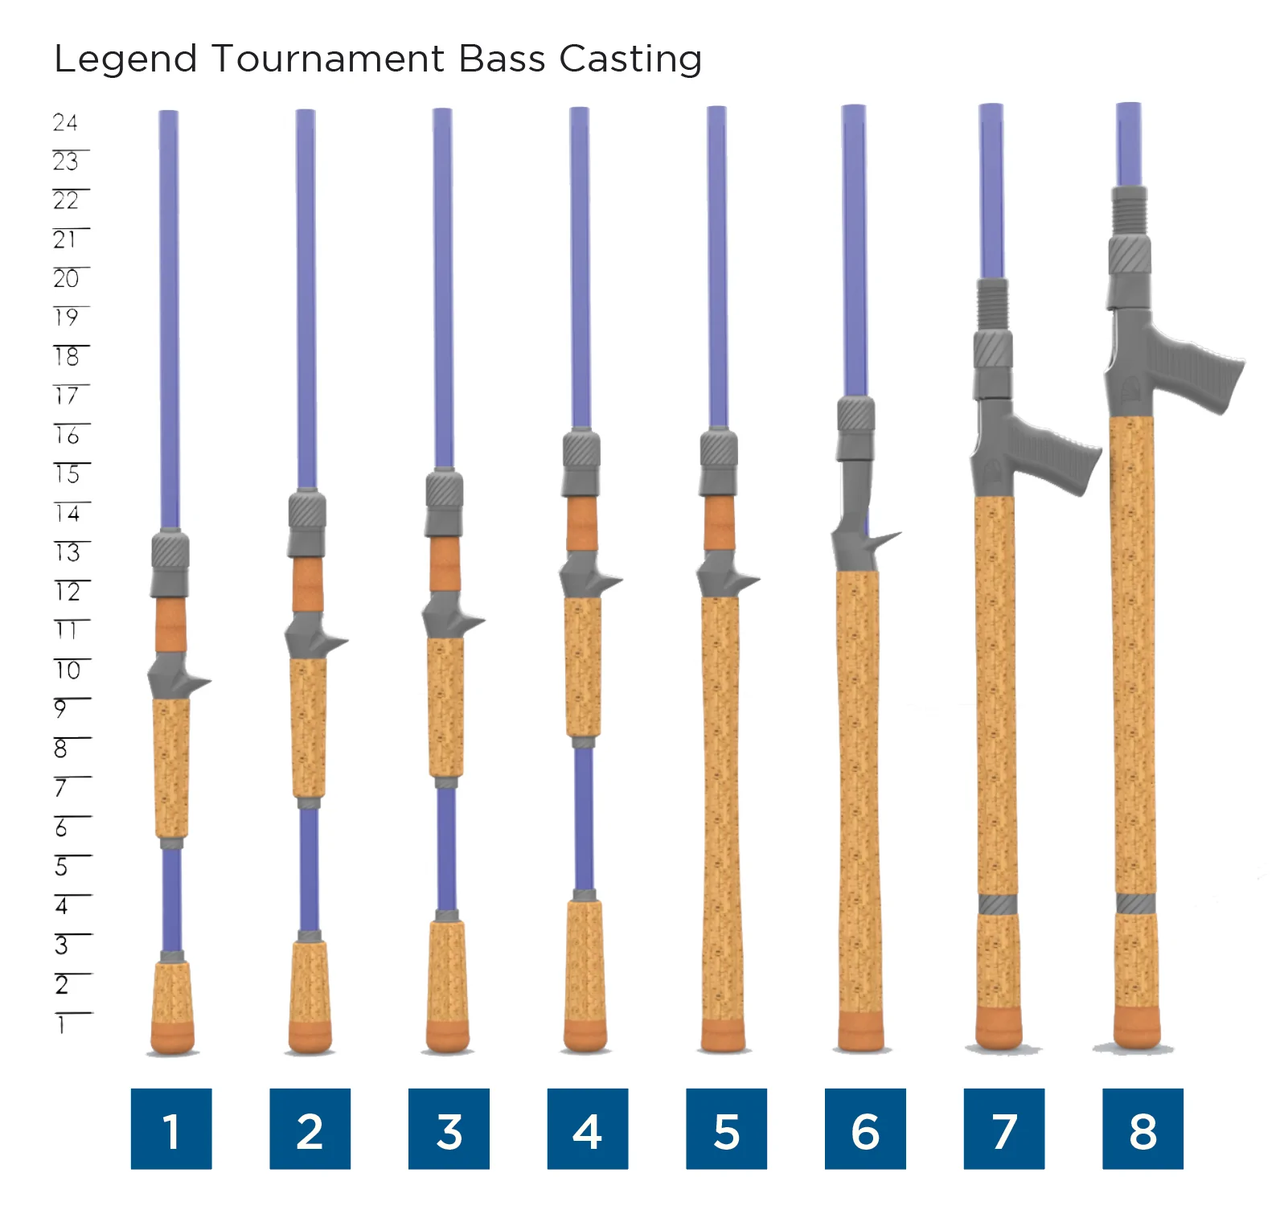 St. Croix Legend Tournament Bass Casting Rod - No Bad Days Kayak